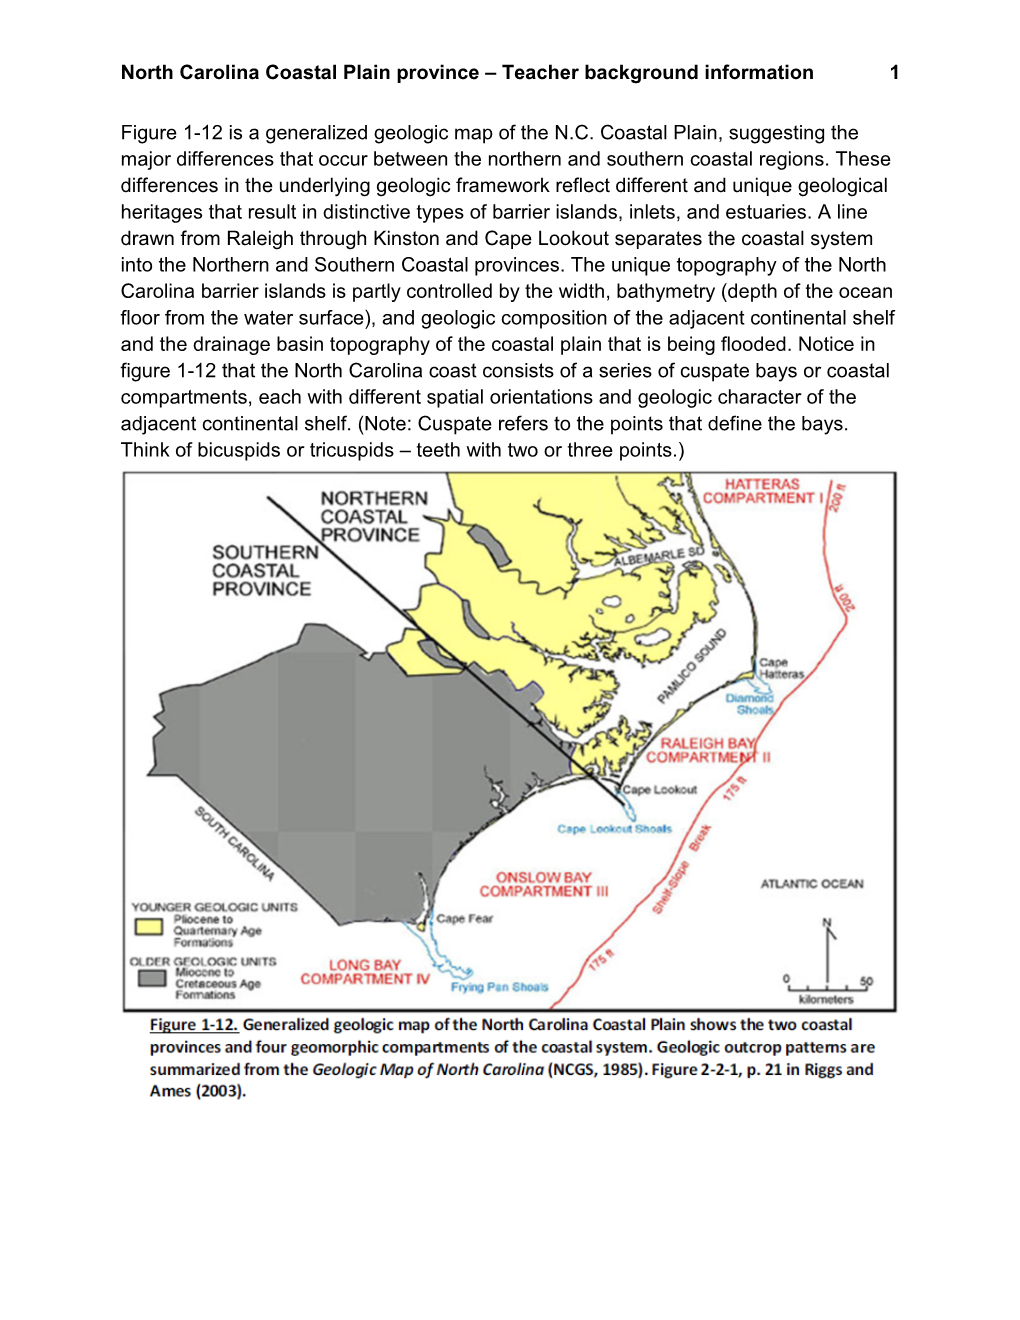 North Carolina Coastal Plain Province – Teacher Background Information 1